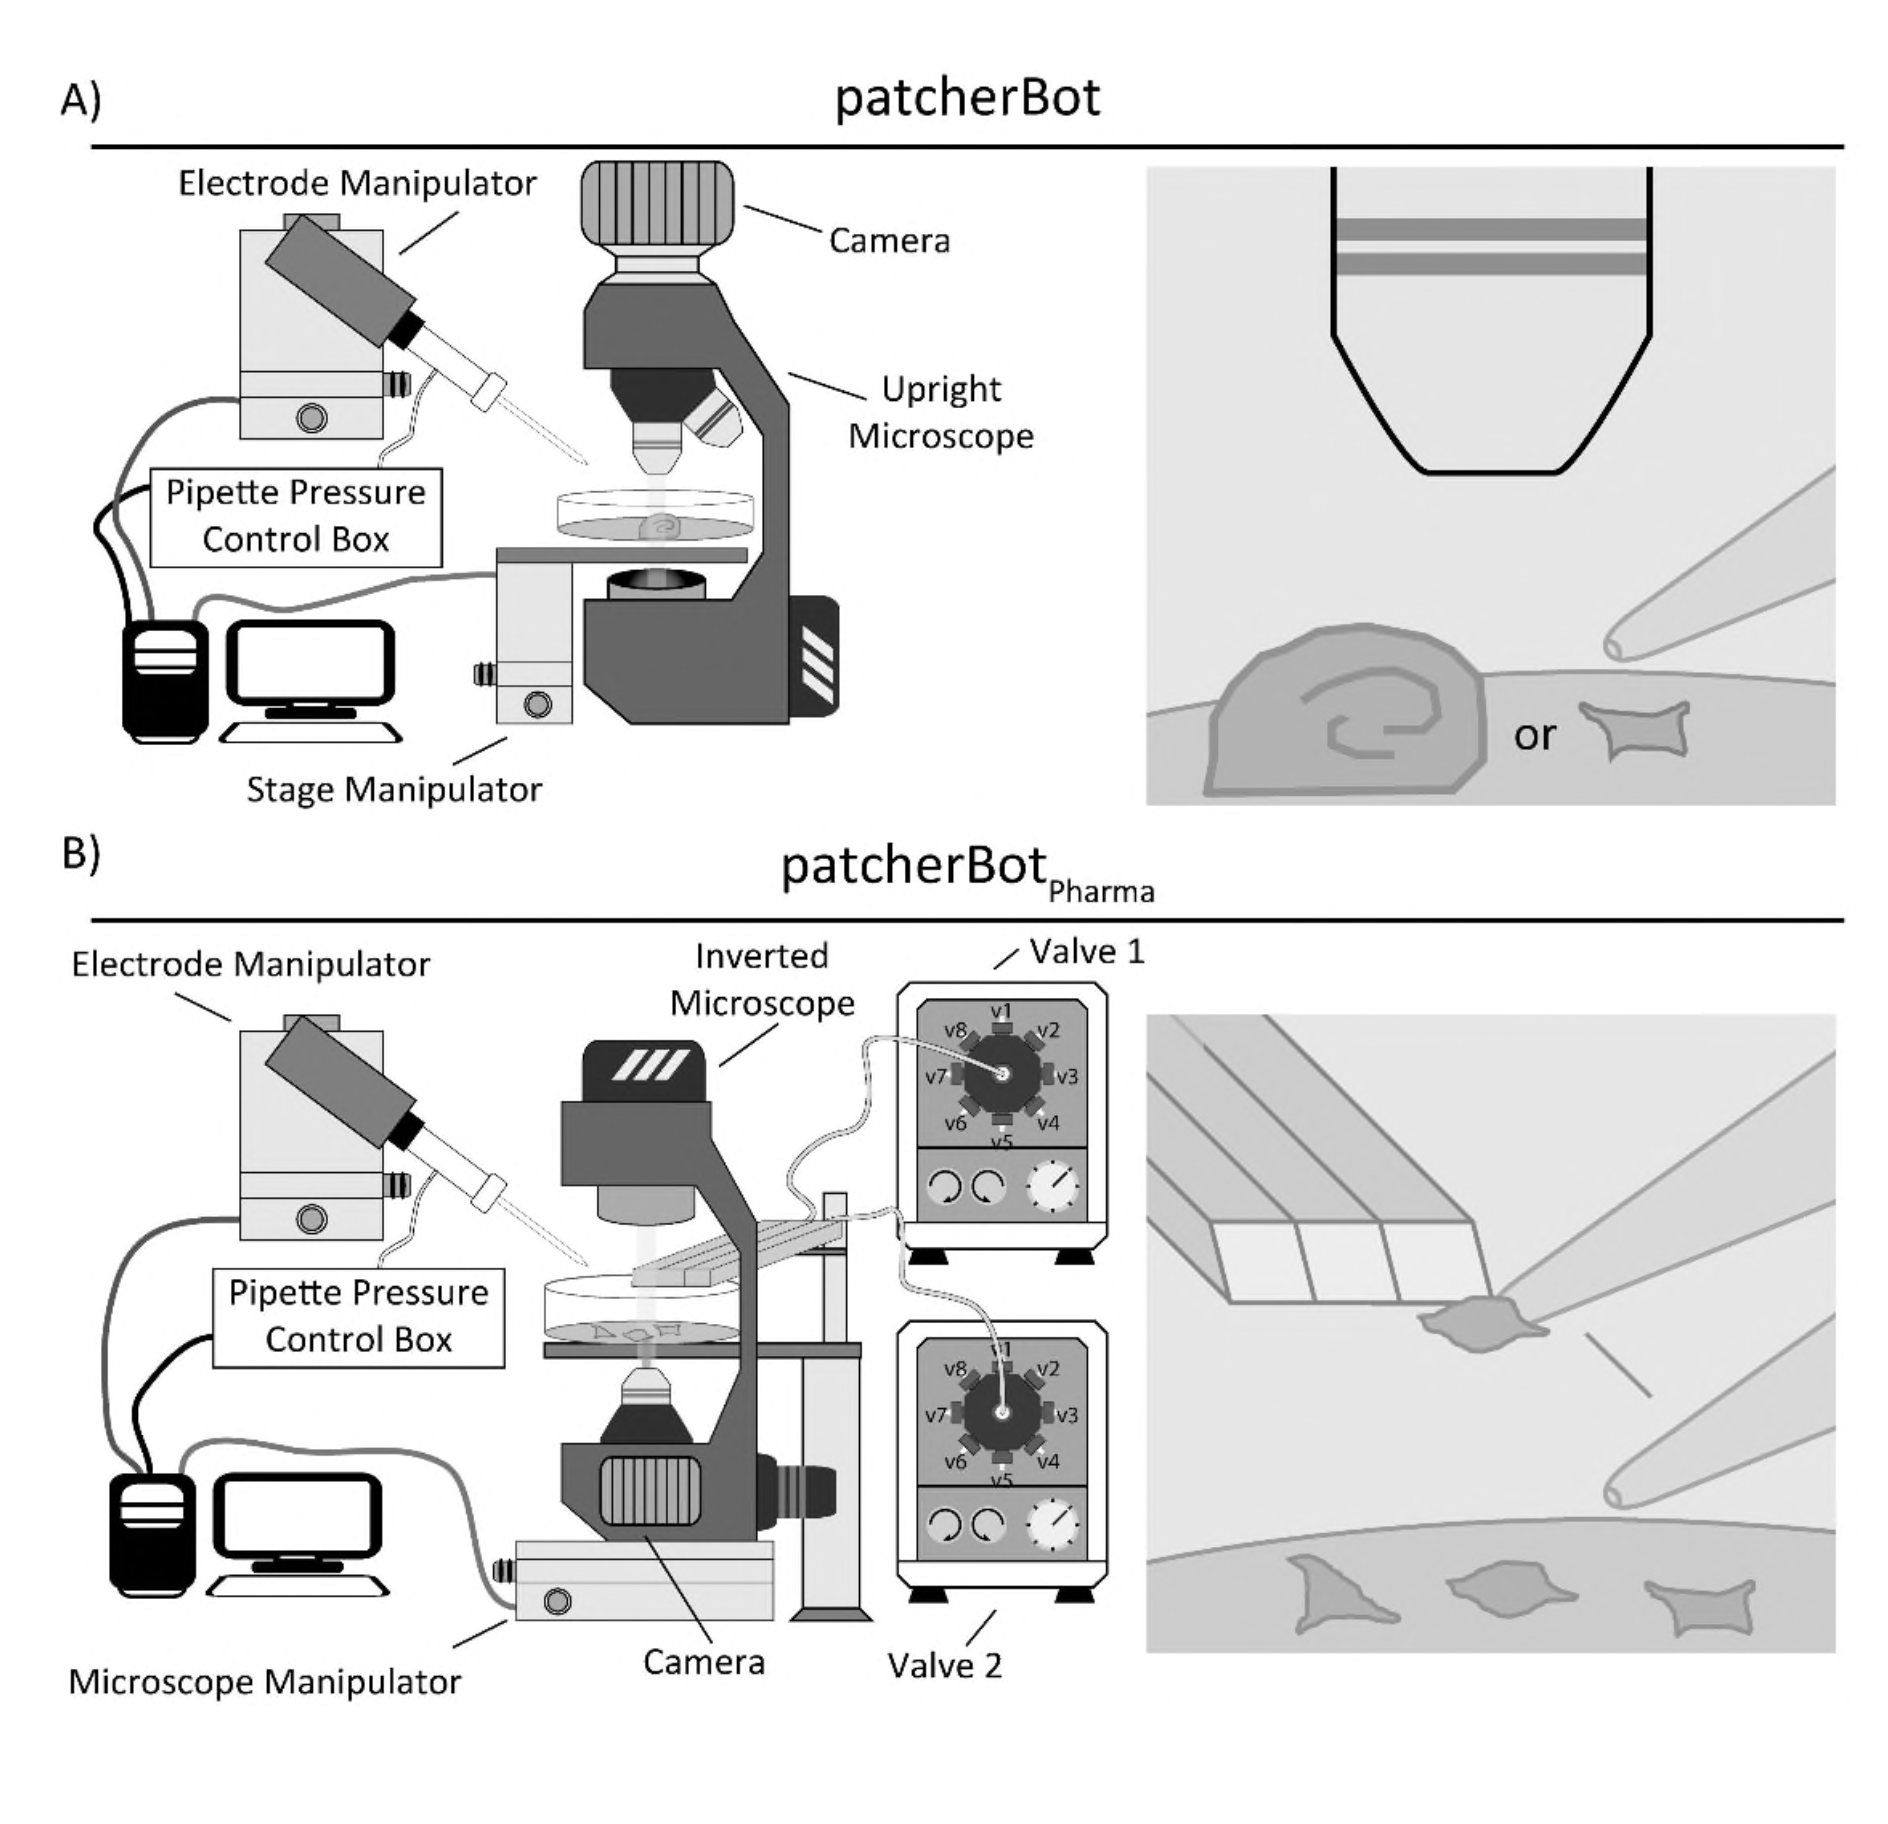 patcherBot<sub>pharma</sub> Automated Intracellular Pharmacological Electrophysiology Robot